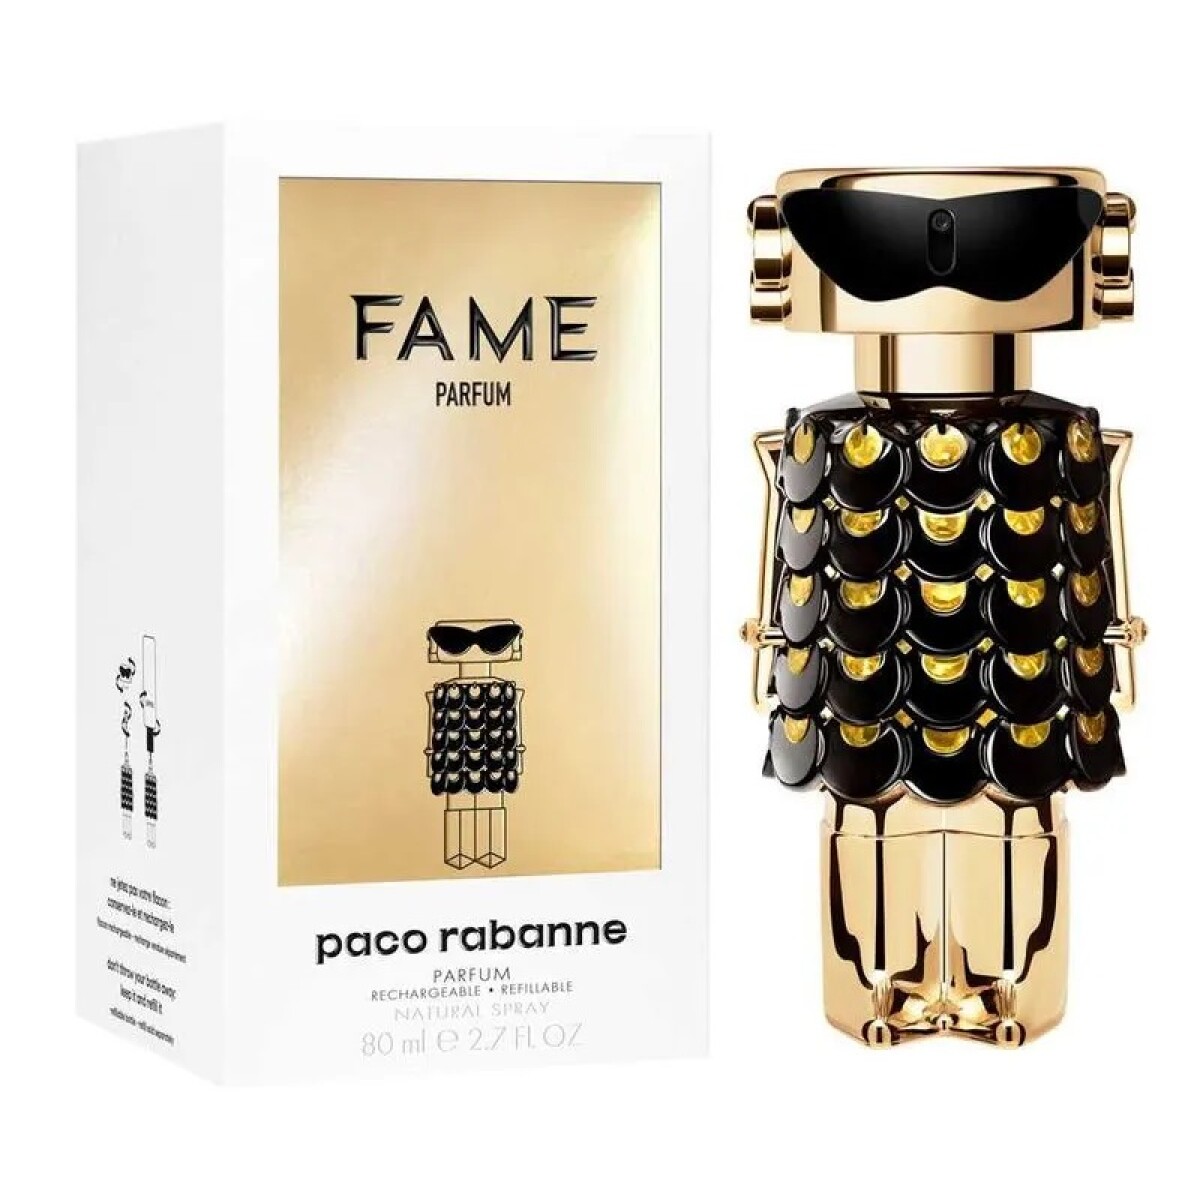 Perfume Fame Parfum 80 Ml. Refillable 